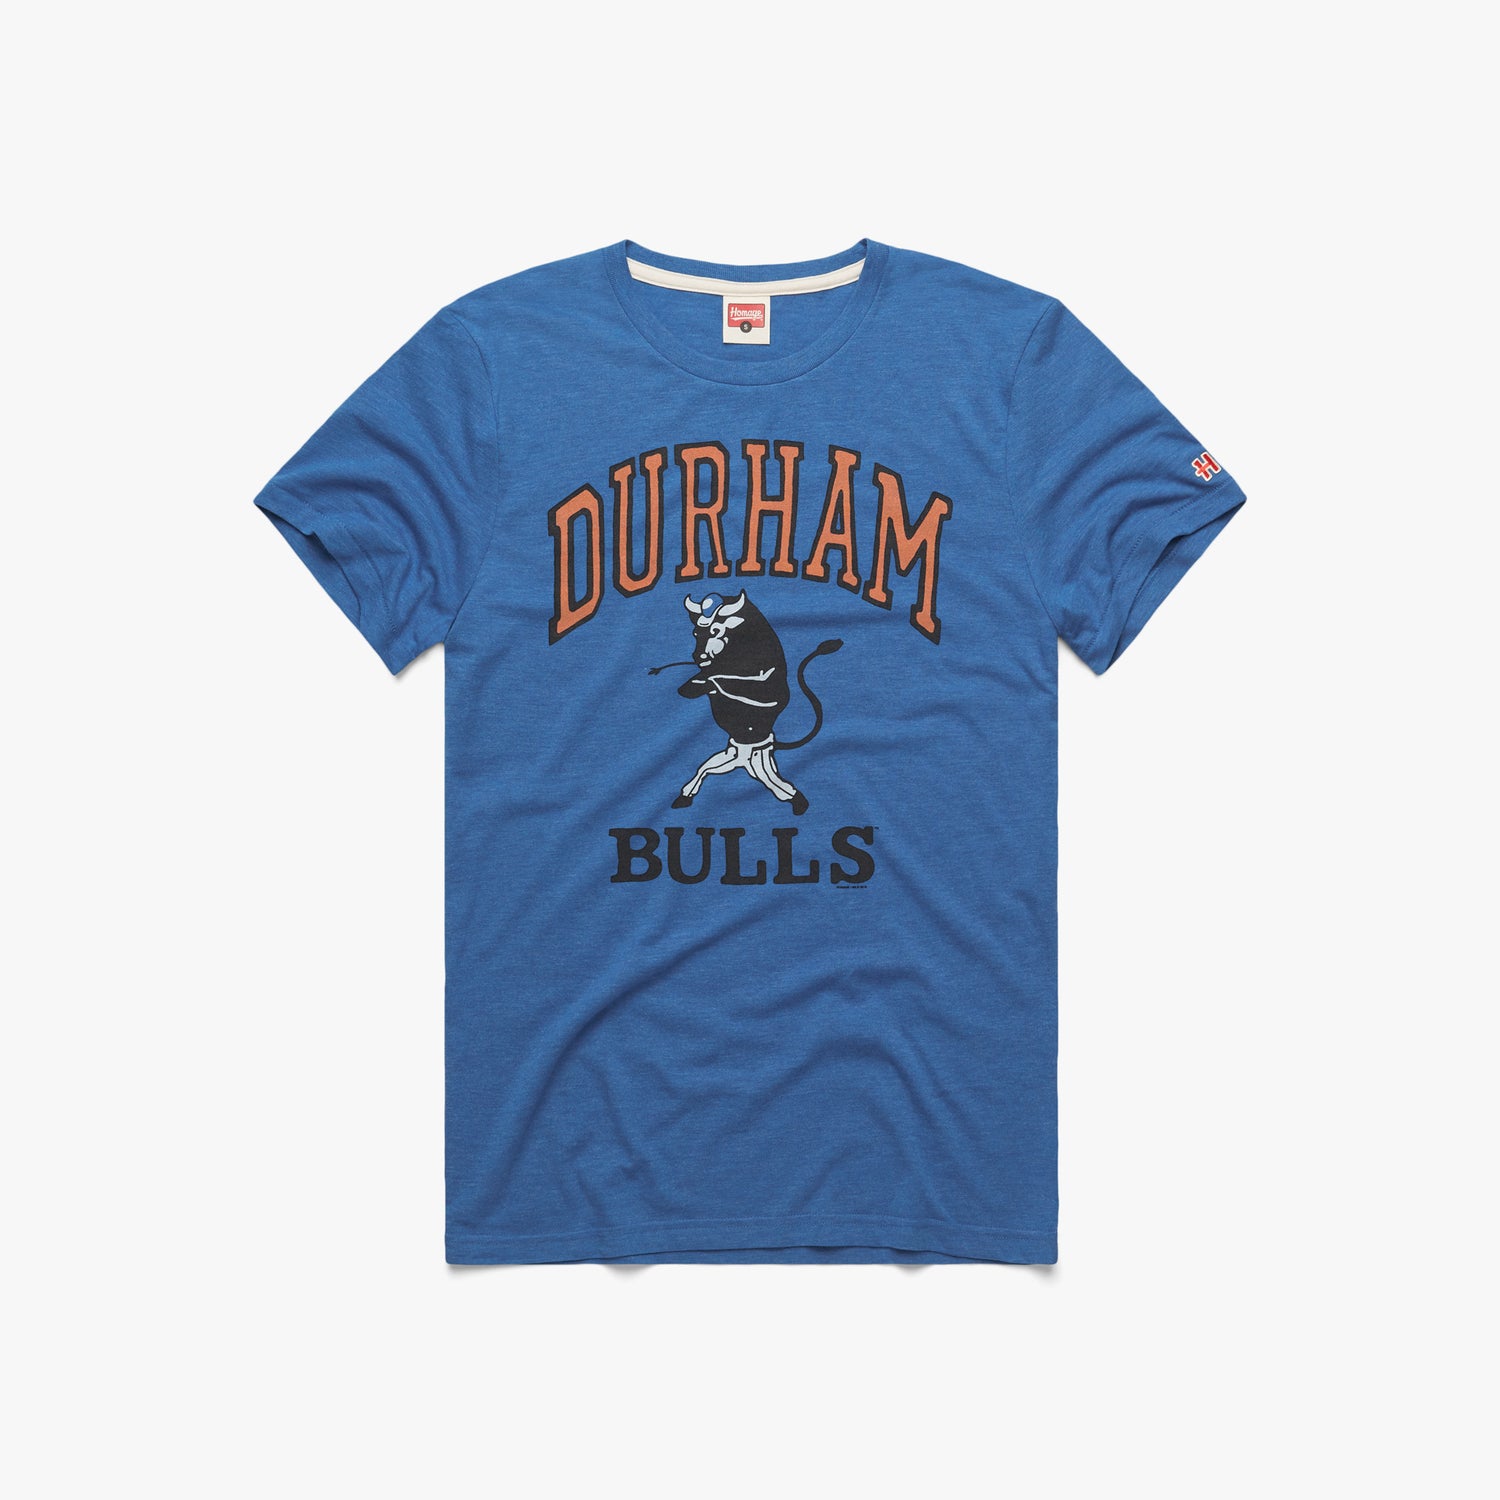 Durham: Home of the Bulls T-Shirt